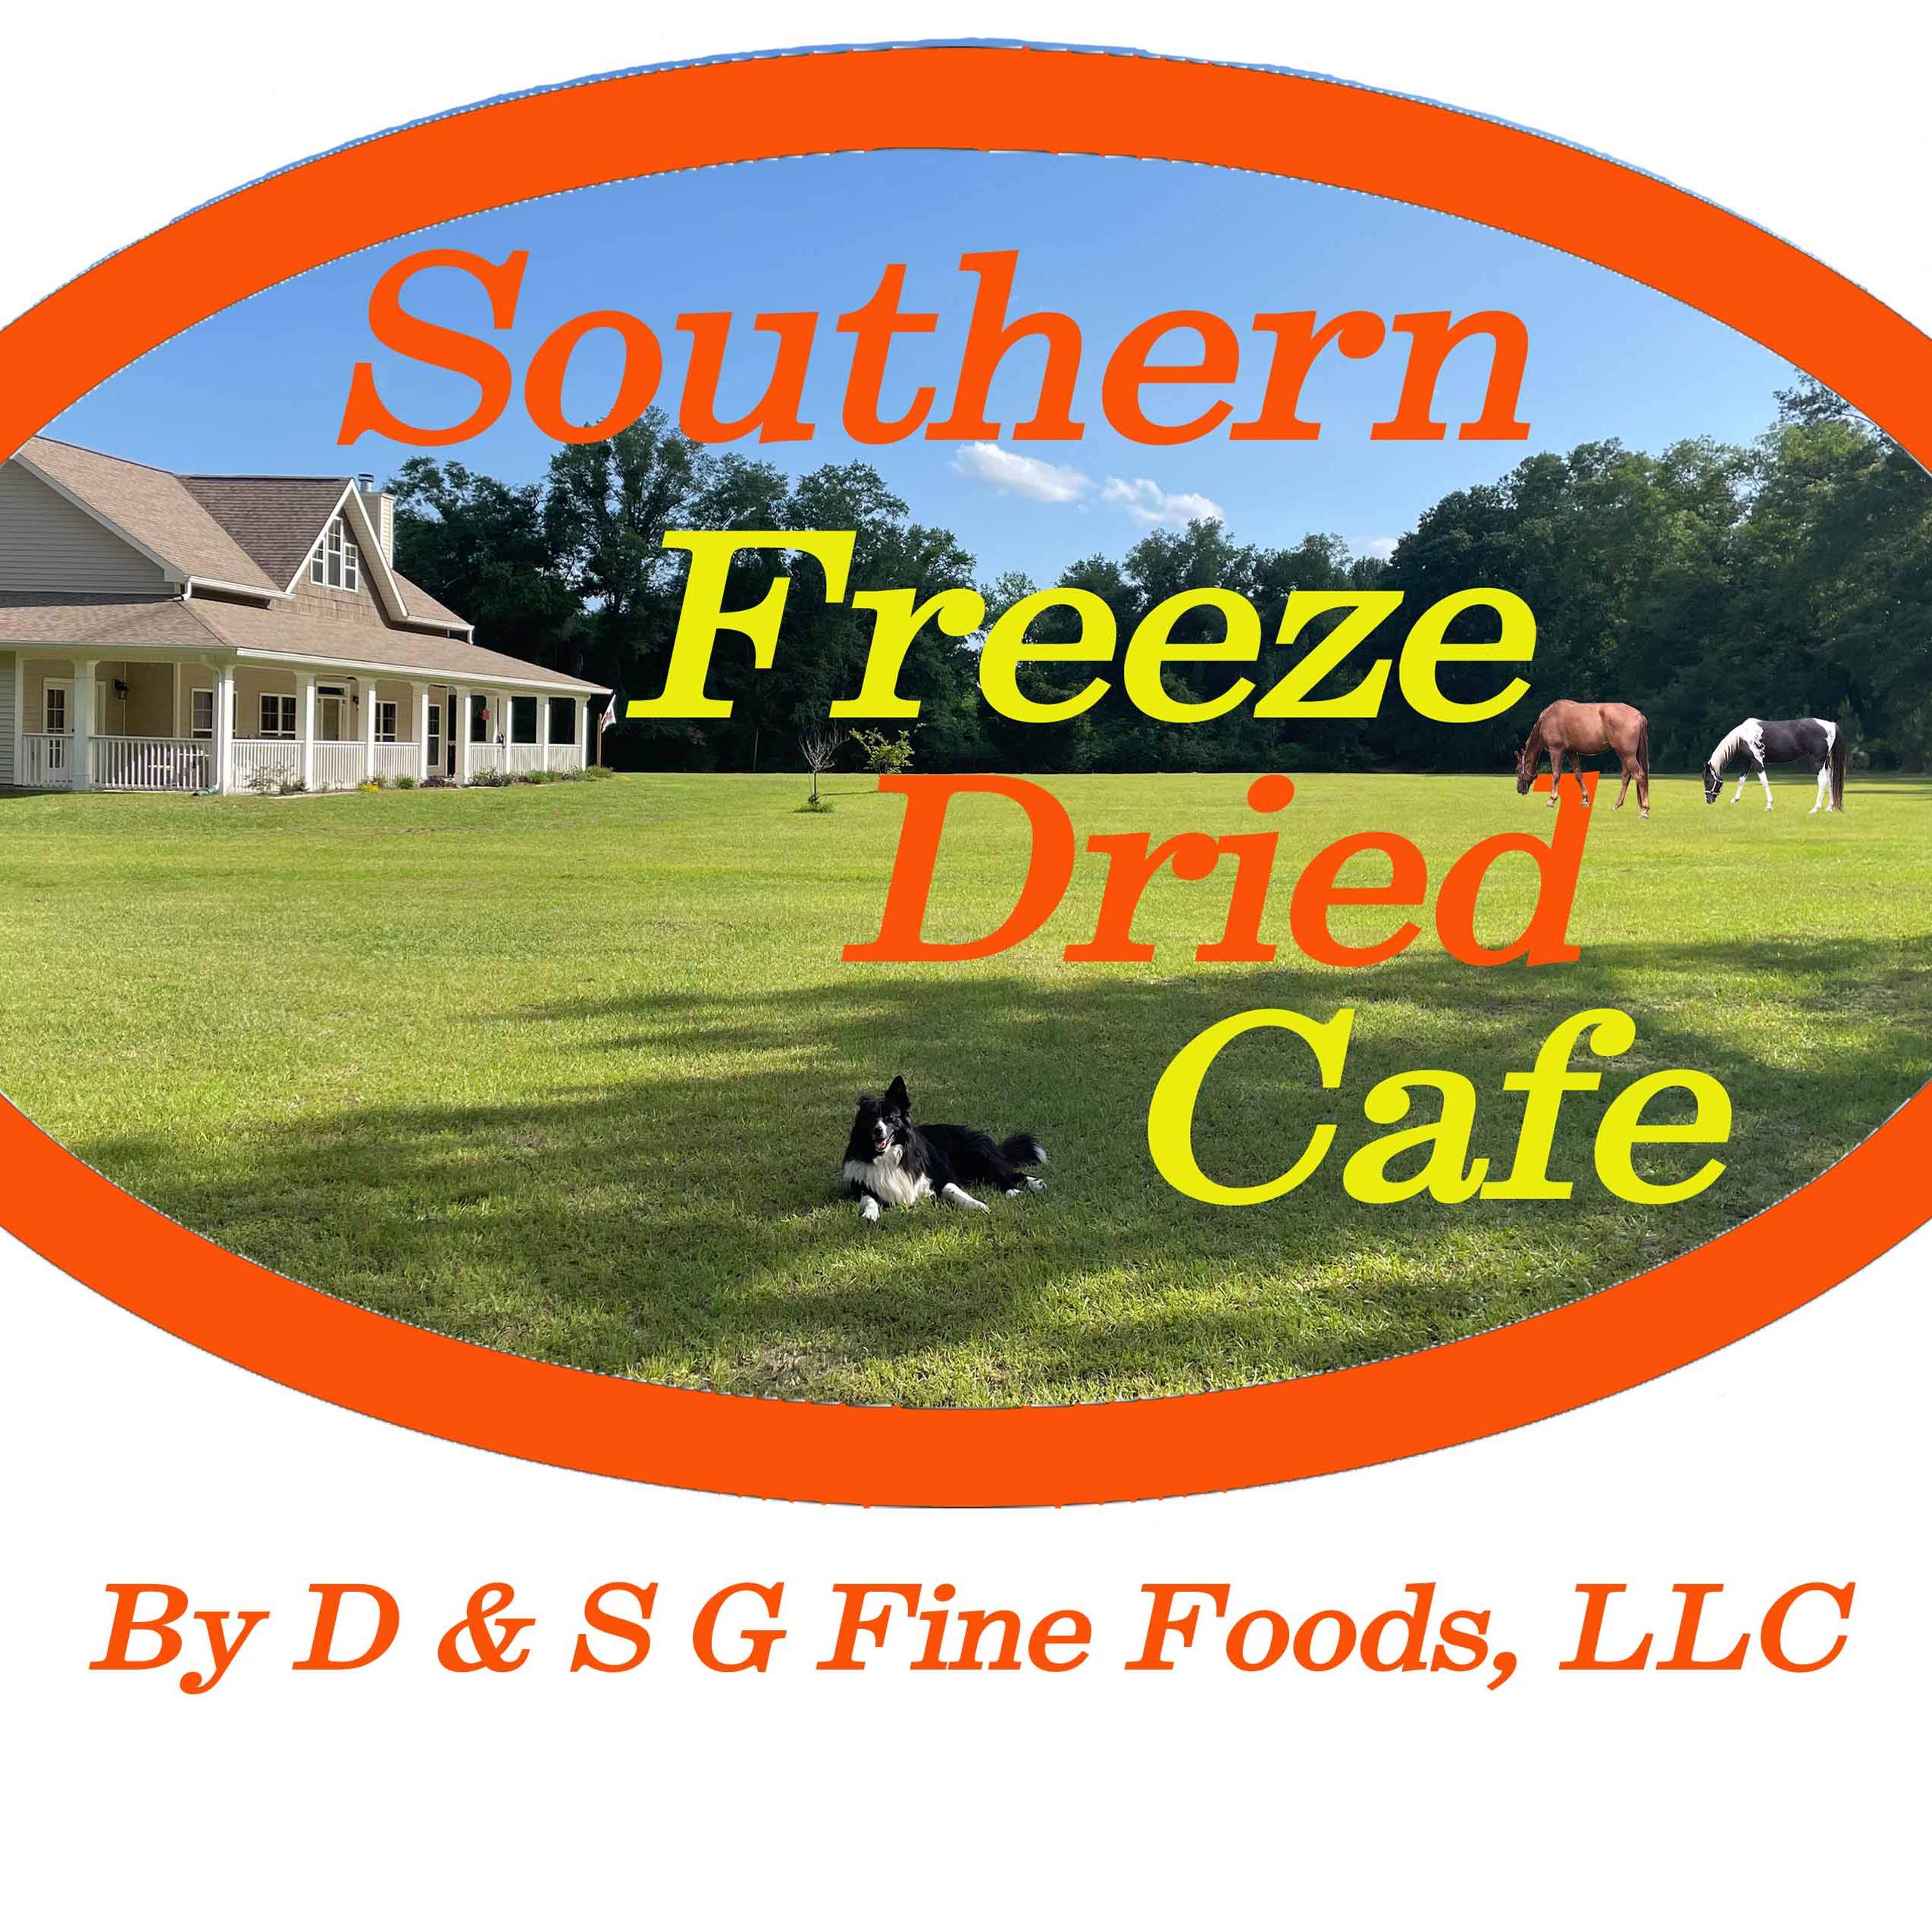 Southern Freeze Dried Cafe